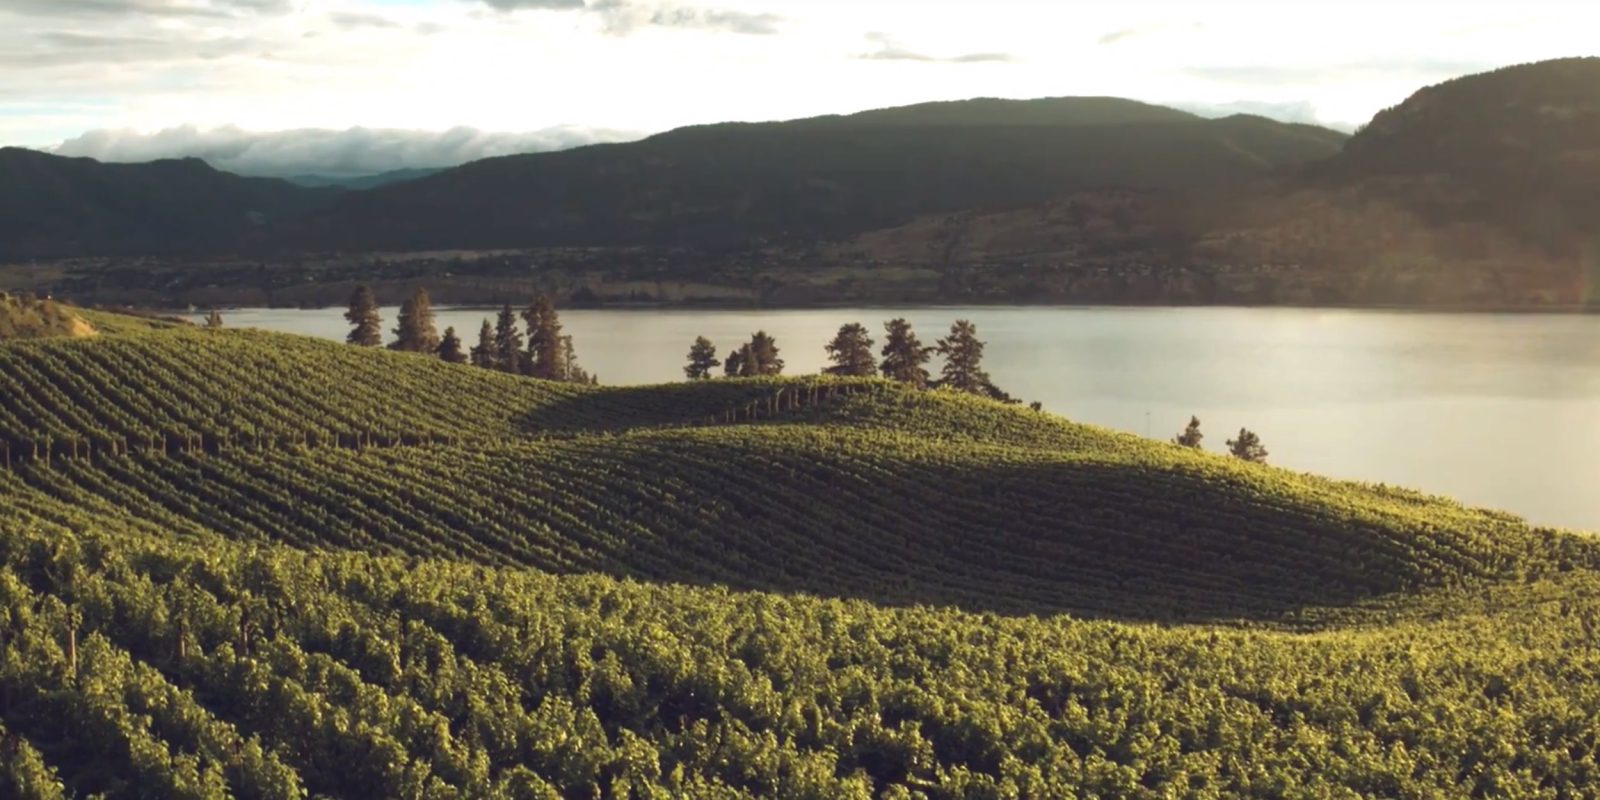 DroneRise - DJI Spark and iPhone 8 Plus used to create cinematic video of Okanagan vineyards